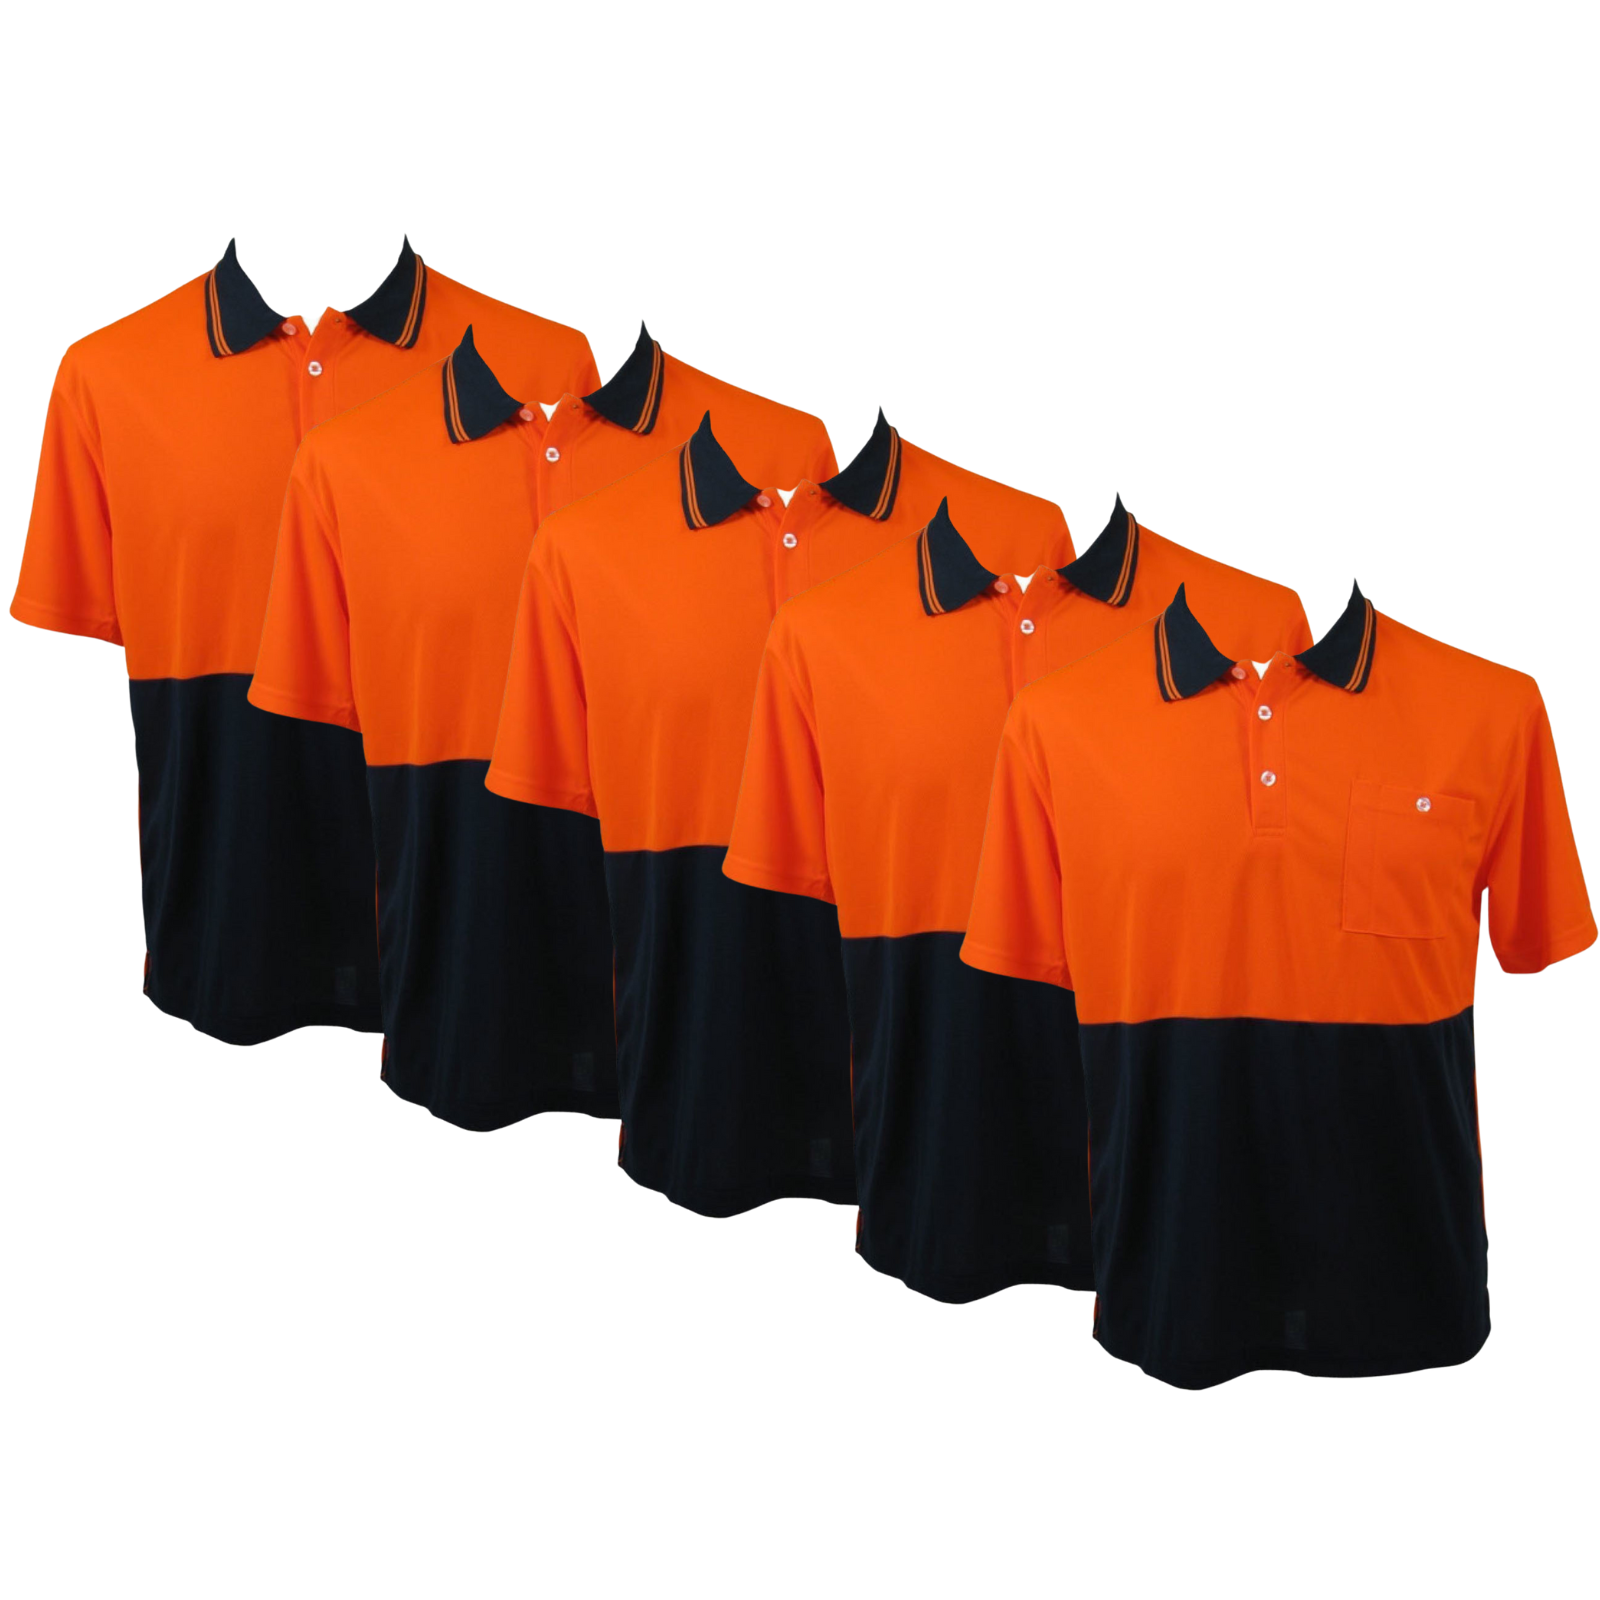 5x HI VIS Polo Shirt Top Tee Safety Workwear Short Sleeve Breathable Mesh BULK